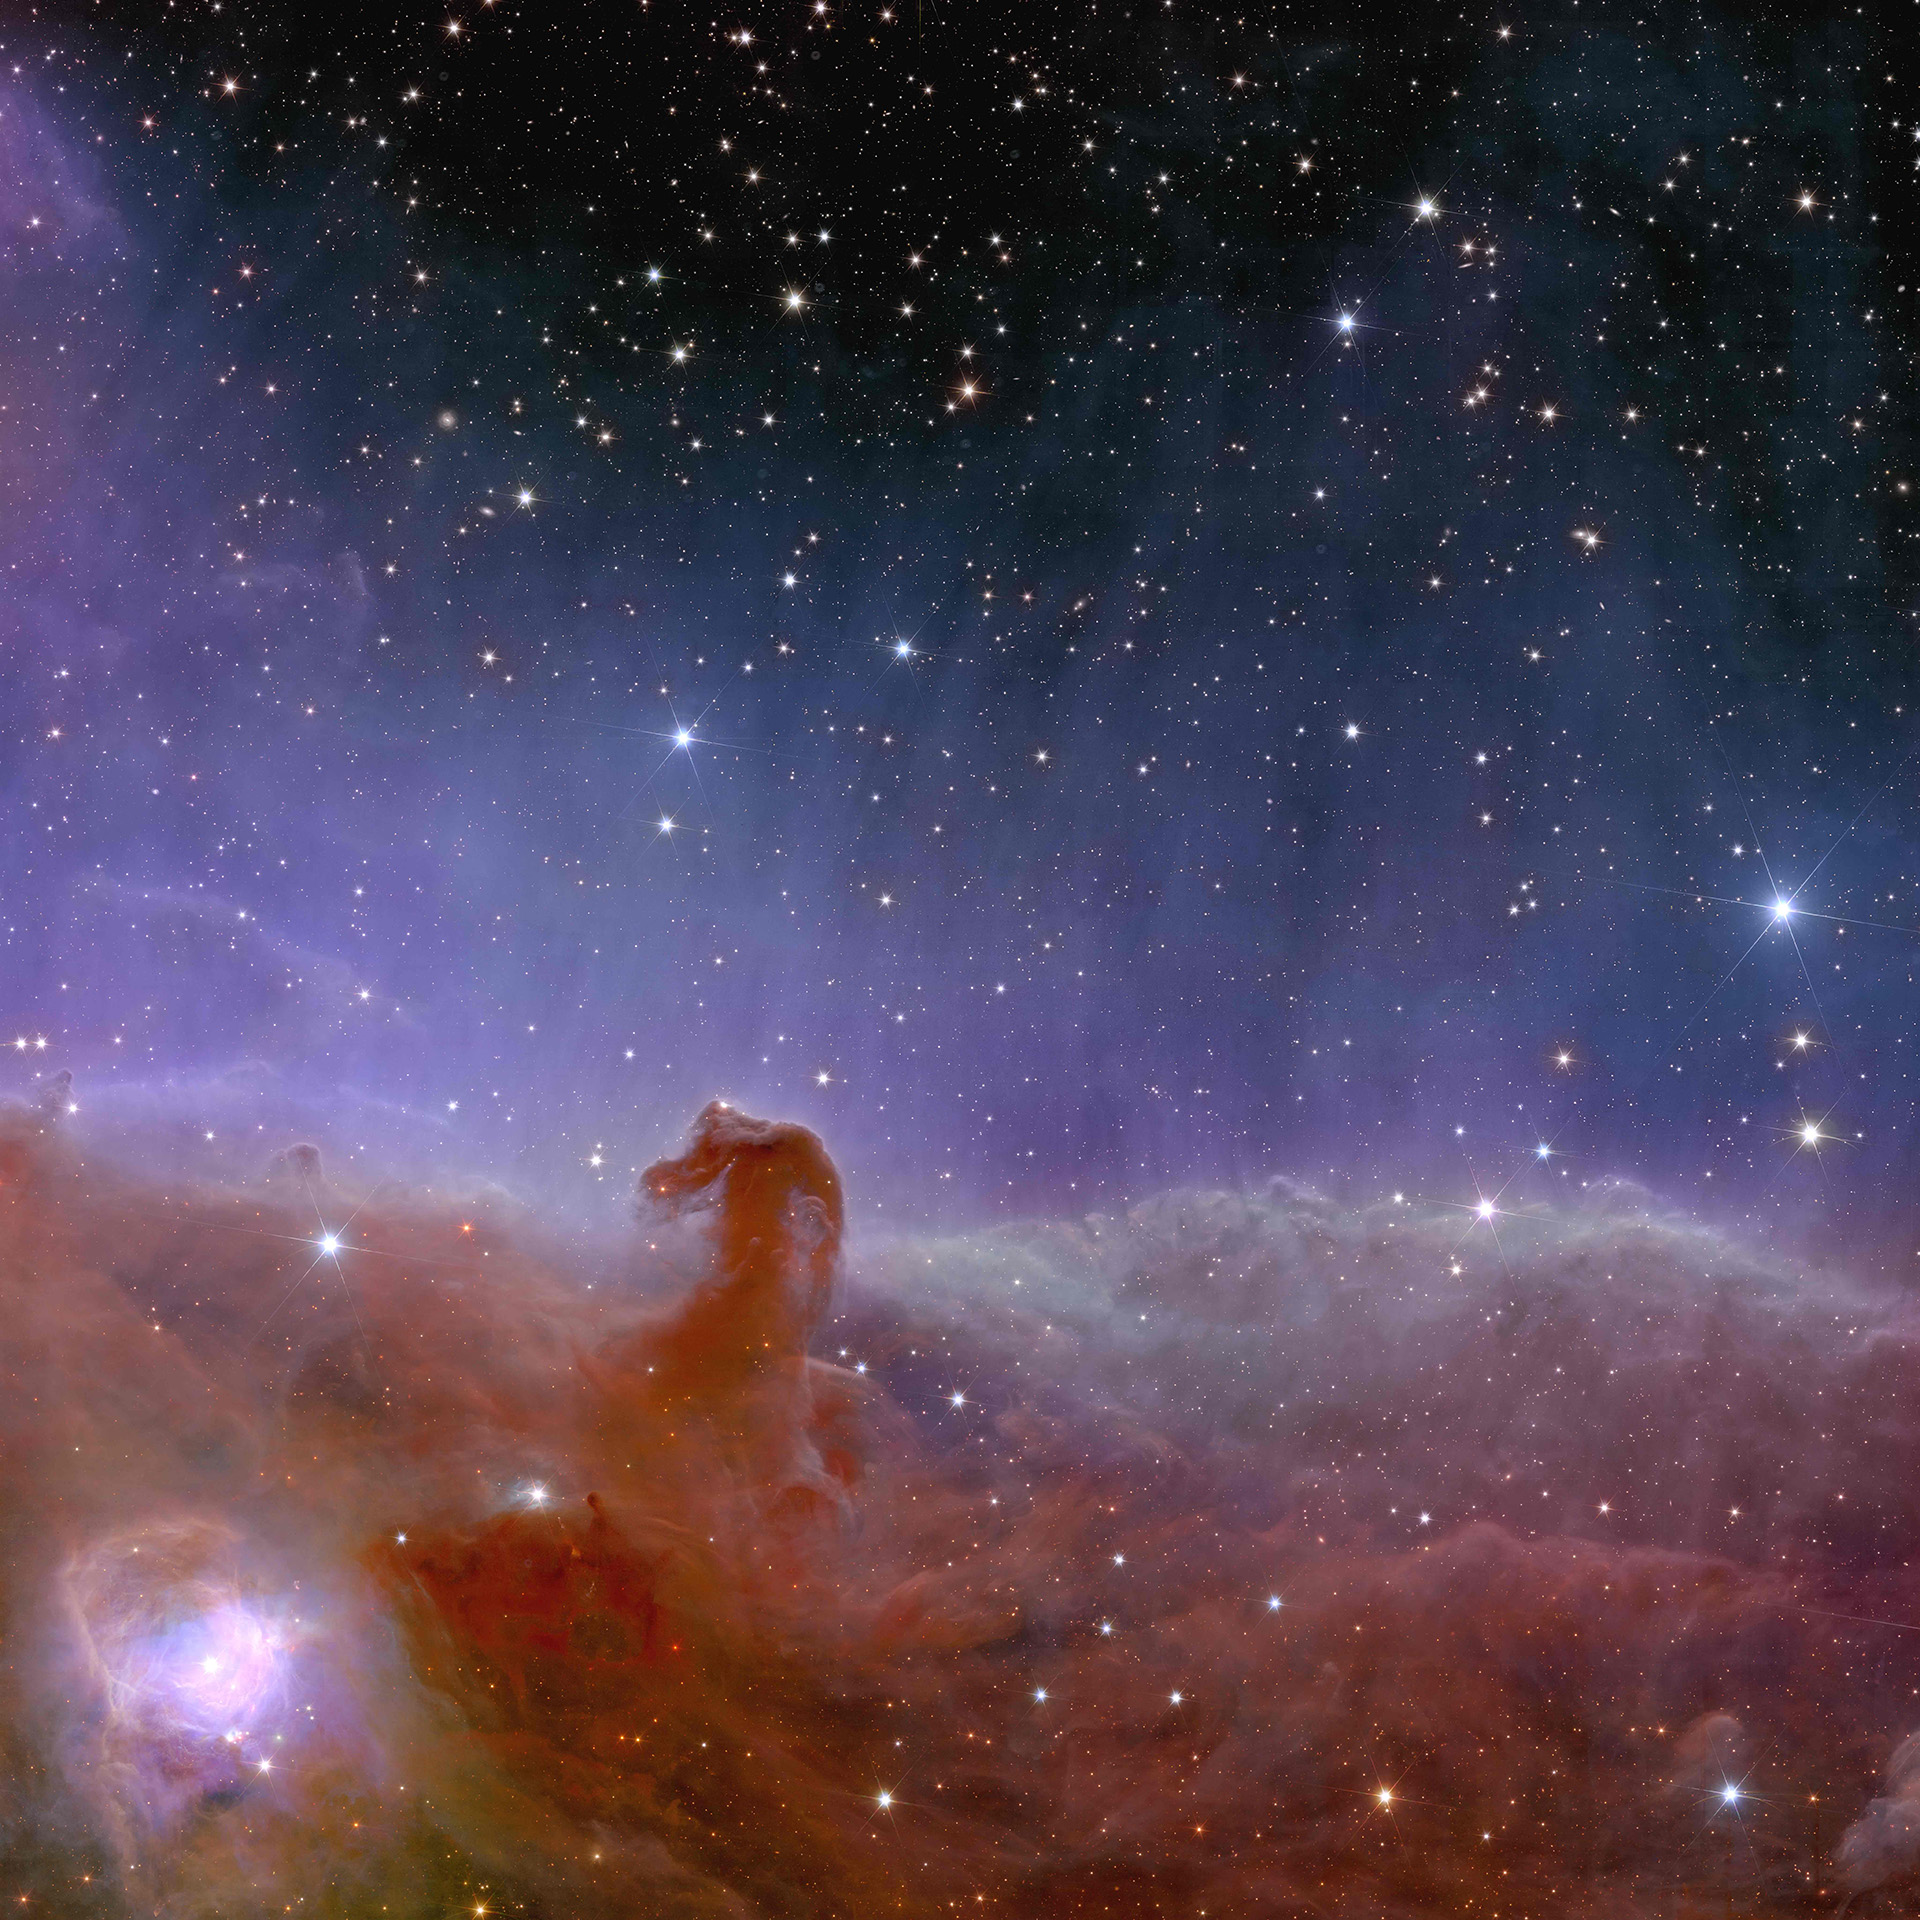 Euclid_s_view_of_the_Horsehead_Nebula.jpg